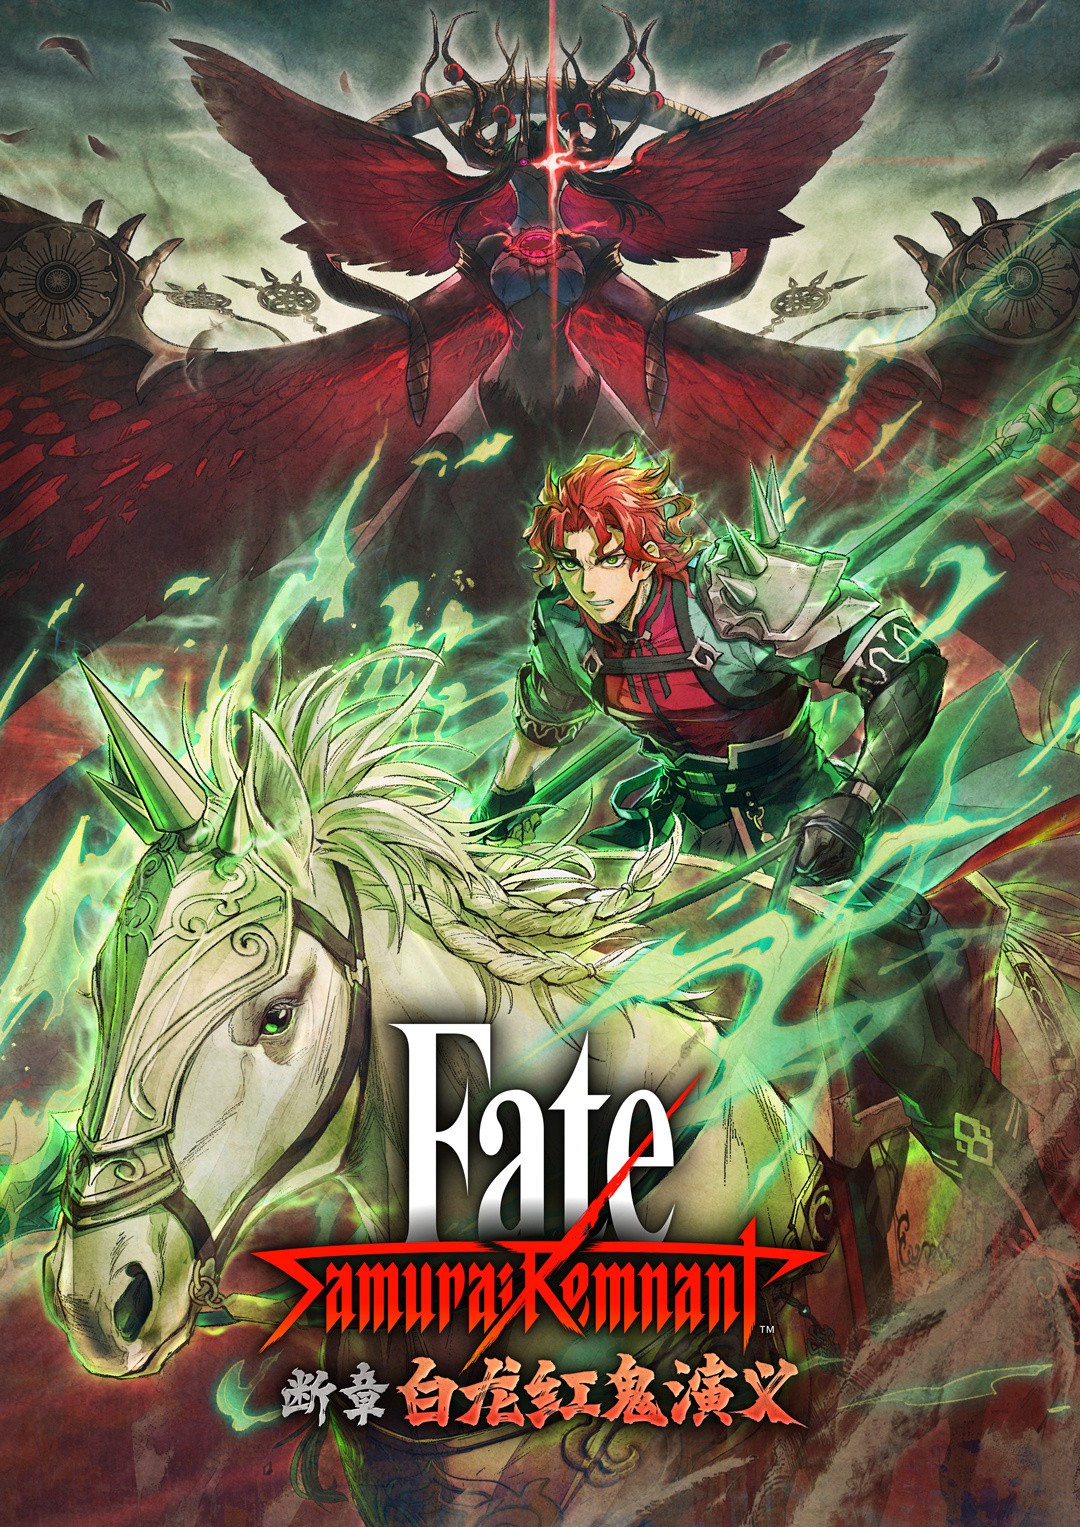 《Fate/Samurai Remnant》DLC第三弹“断章・白龙红鬼演义”公布 6月20日上